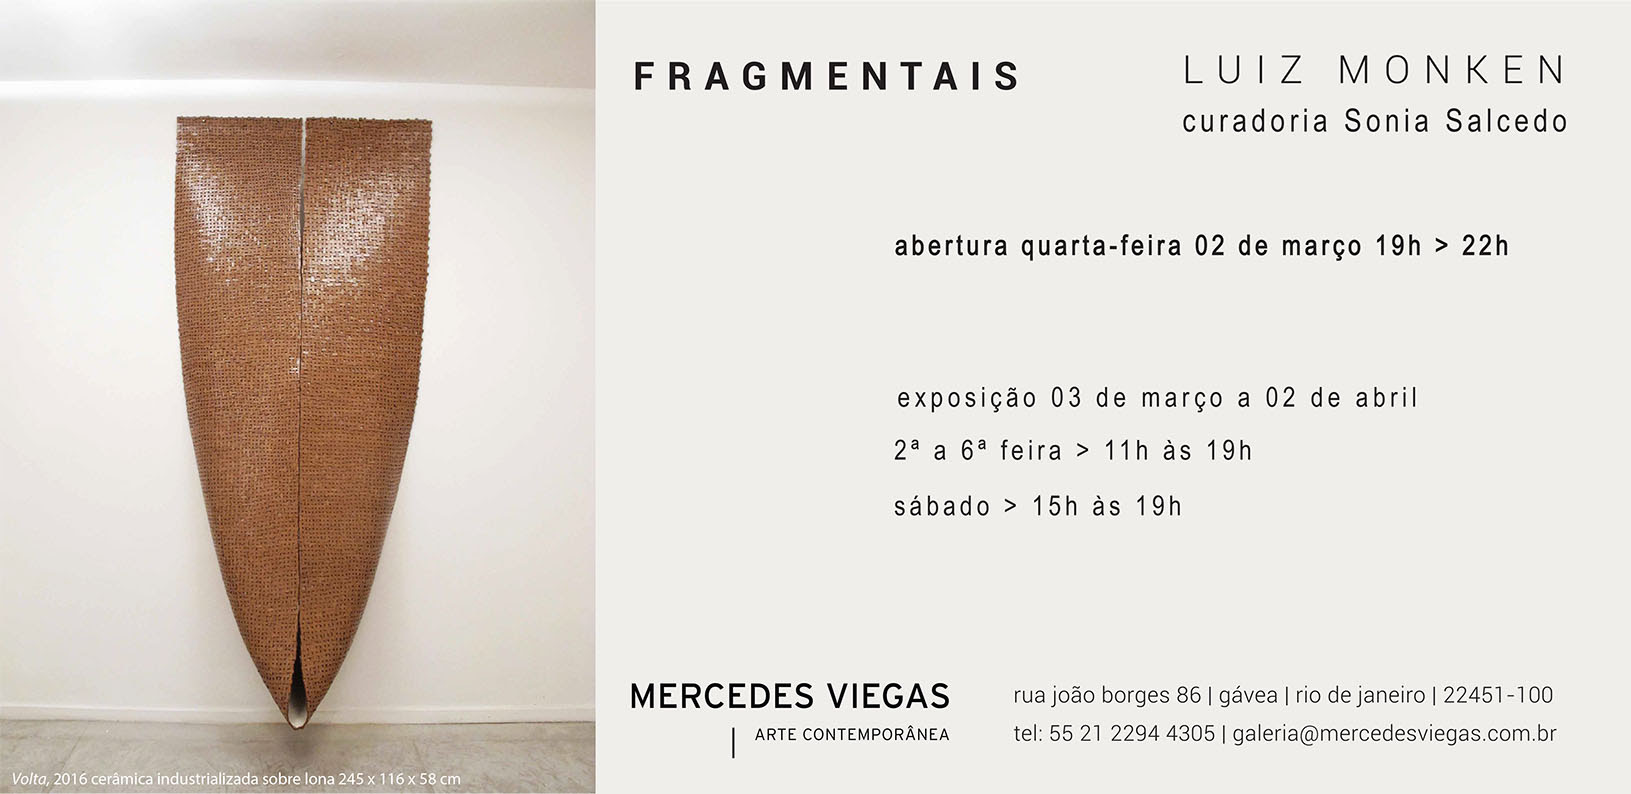 Mercedes Viegas Arte Contemporânea abre exposição de Luiz Monken